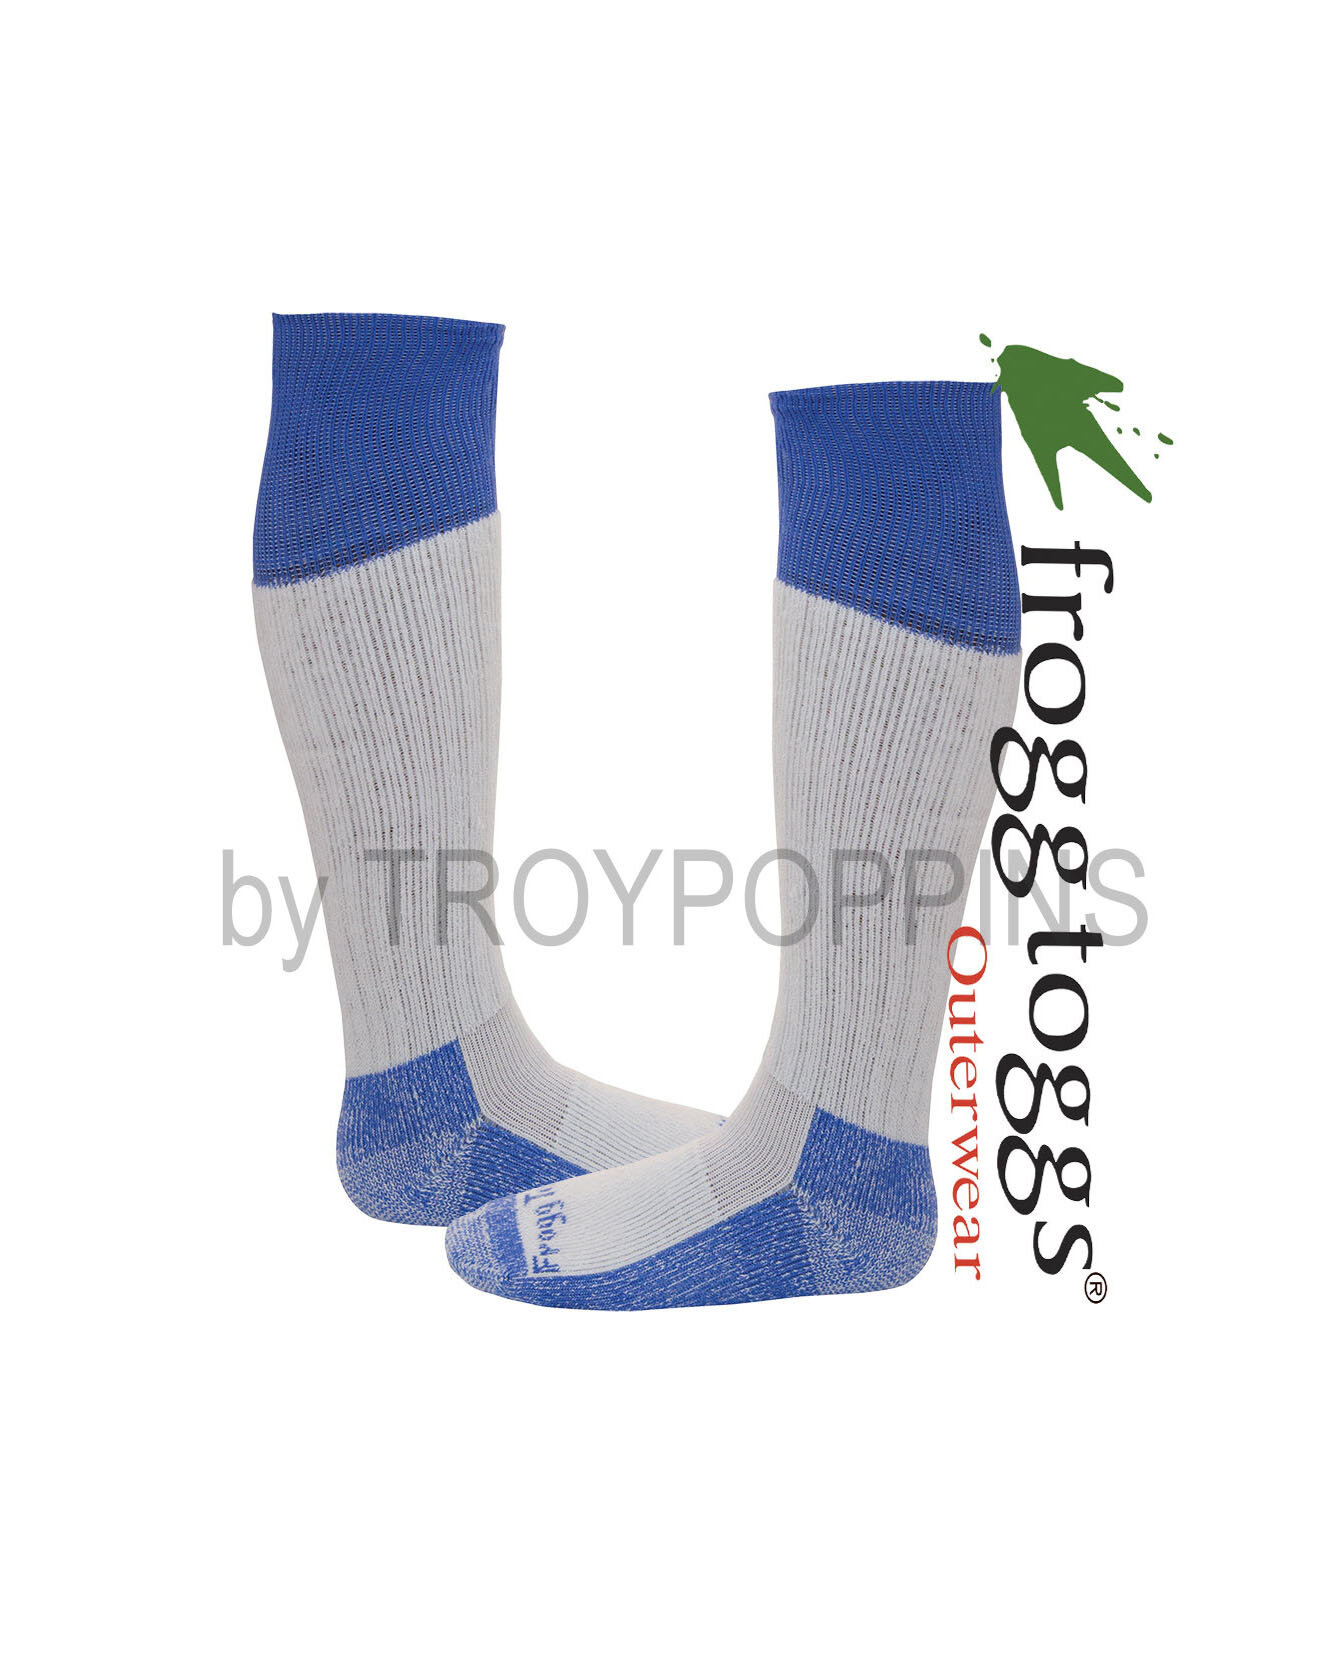 FROGG TOGGS Men's Wool Wader Socks Wool Wader Socks